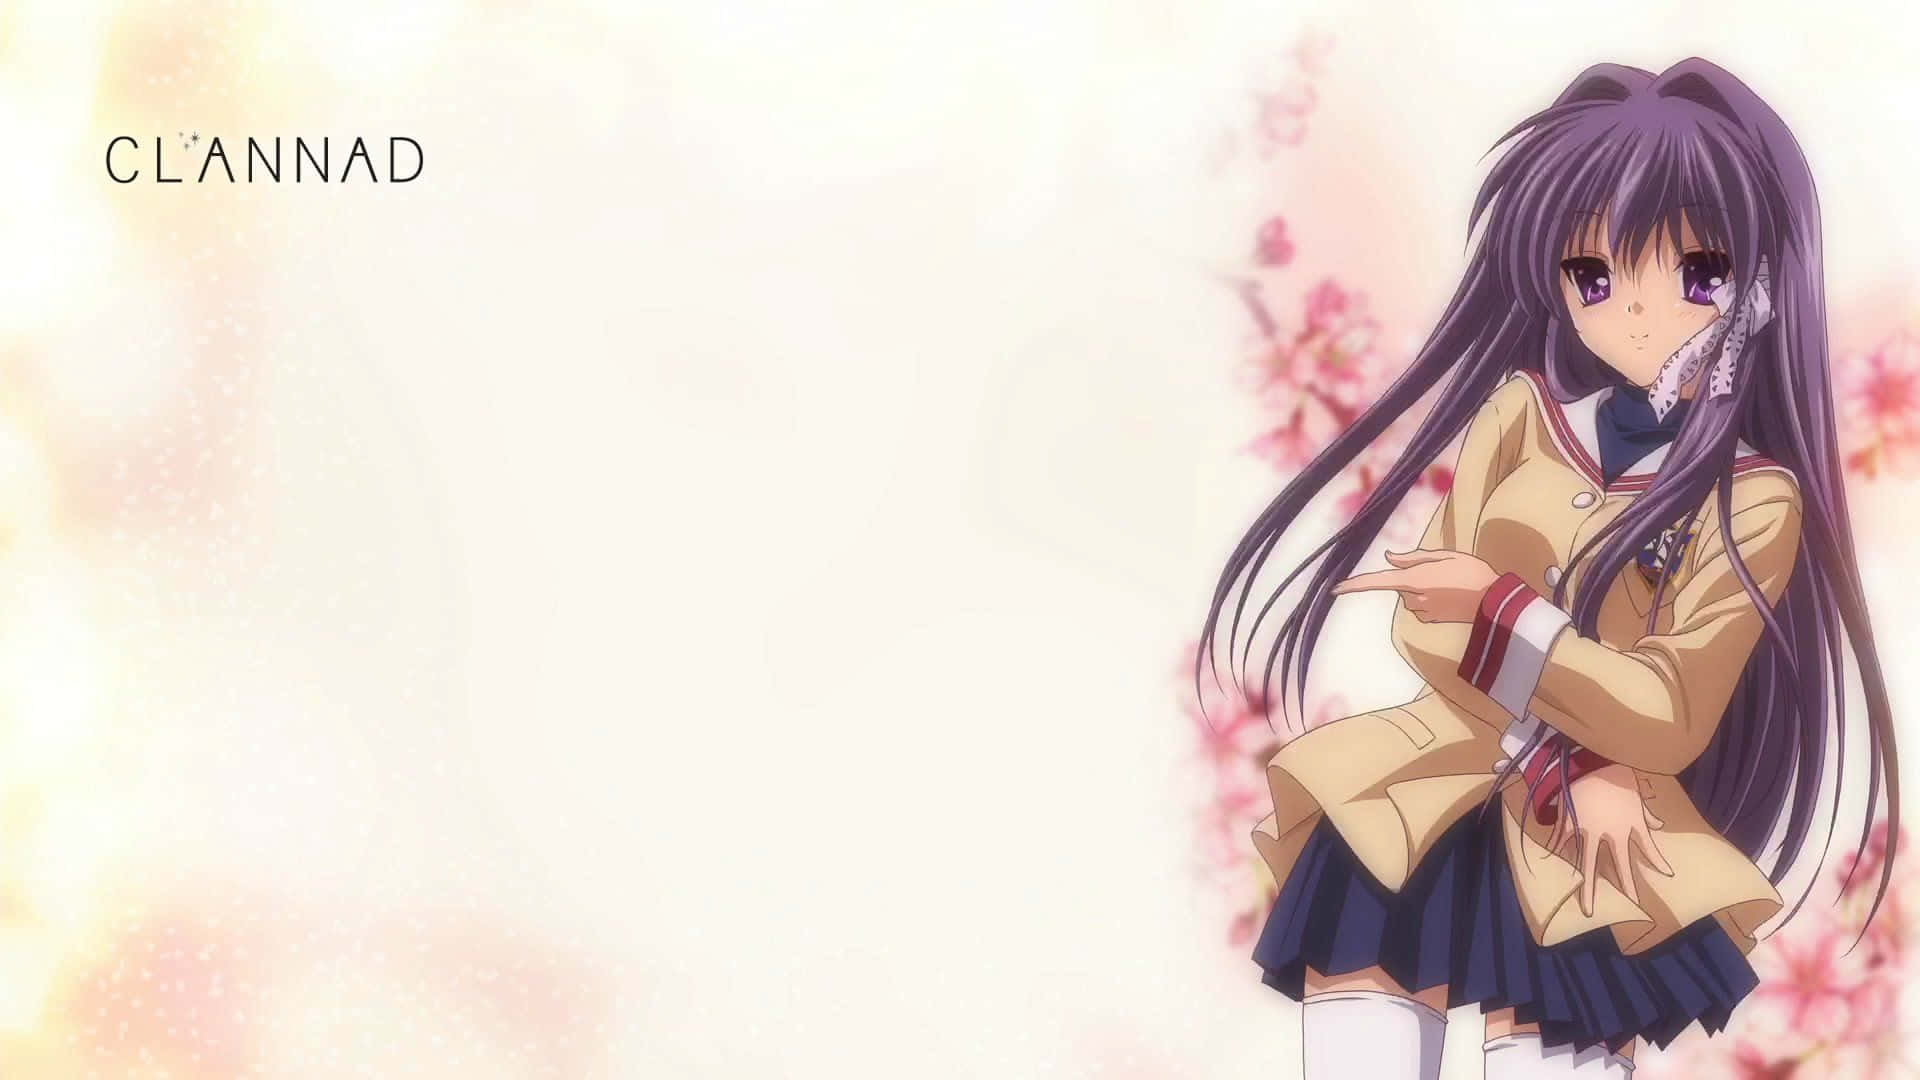 Kyou Fujibayashi - The Vibrant High School Girl From Clannad Anime Wallpaper